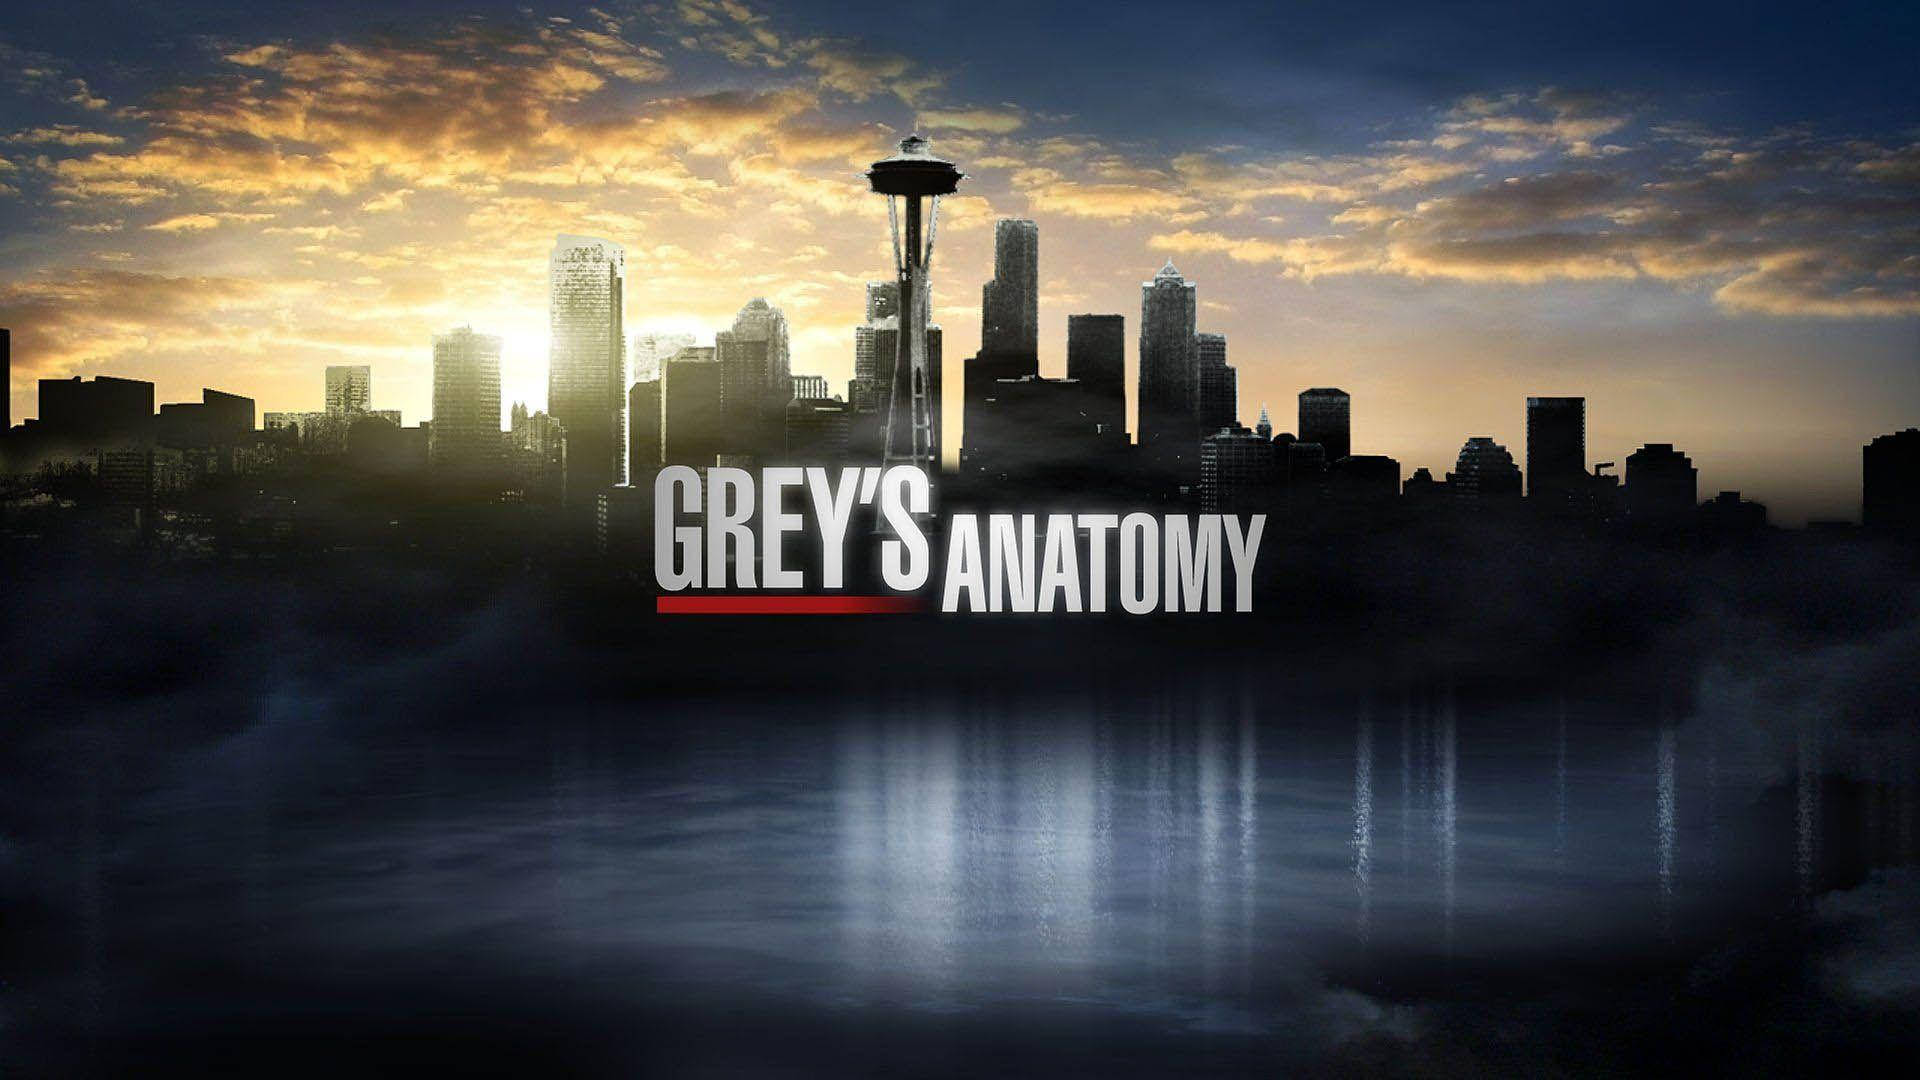 Grey's Anatomy Space Needle